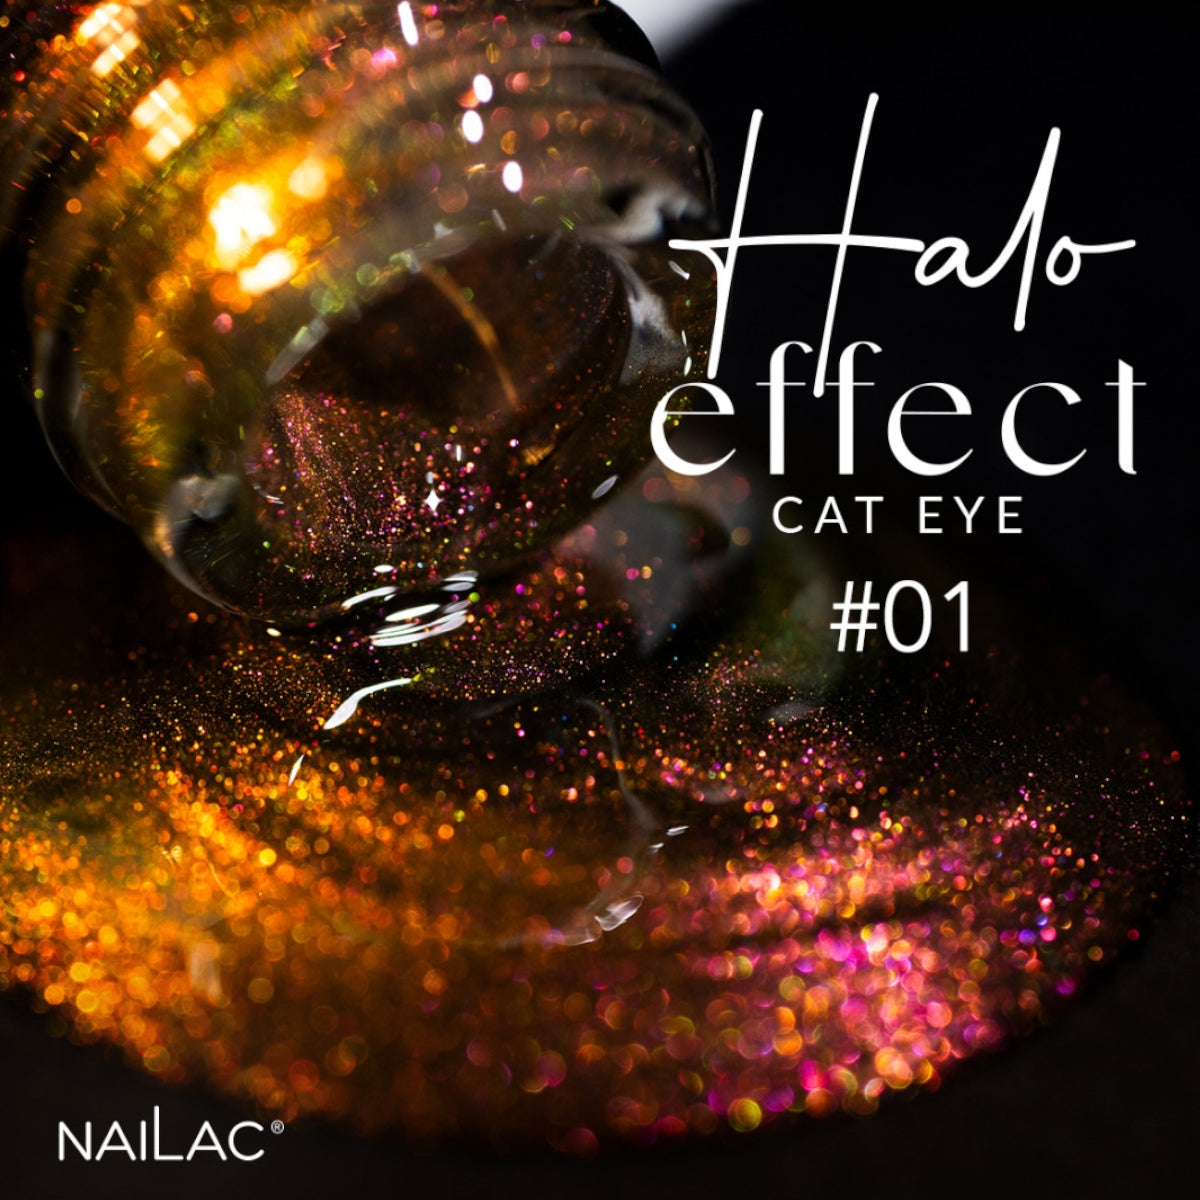 NaiLac UV/LED Gel Nail Polish Halo Effect Cat Eye Glitter 01